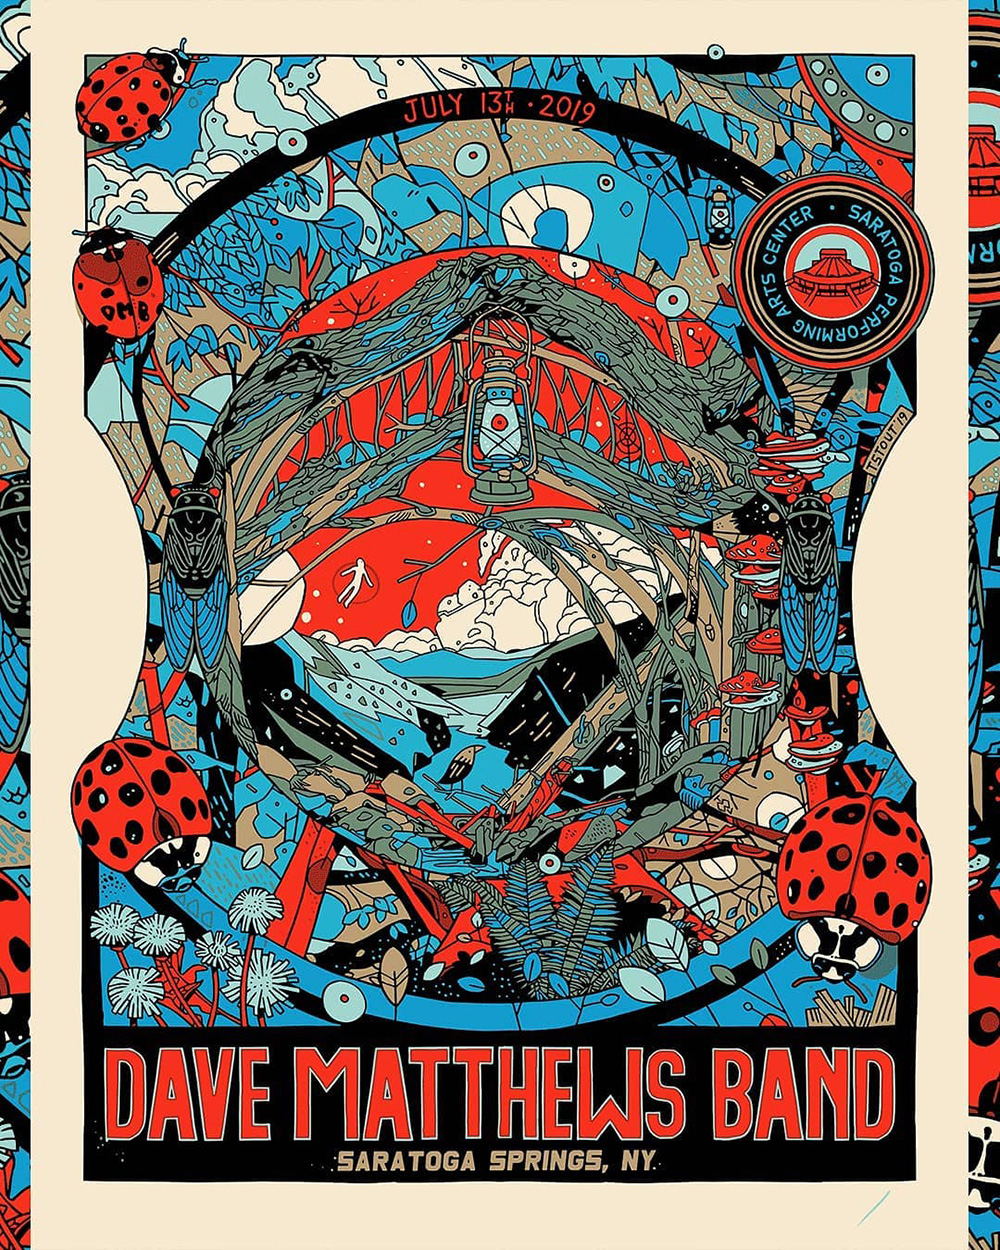 Him posters. Dave Matthews Band. Dave Matthews Band logo. Best poster Art.